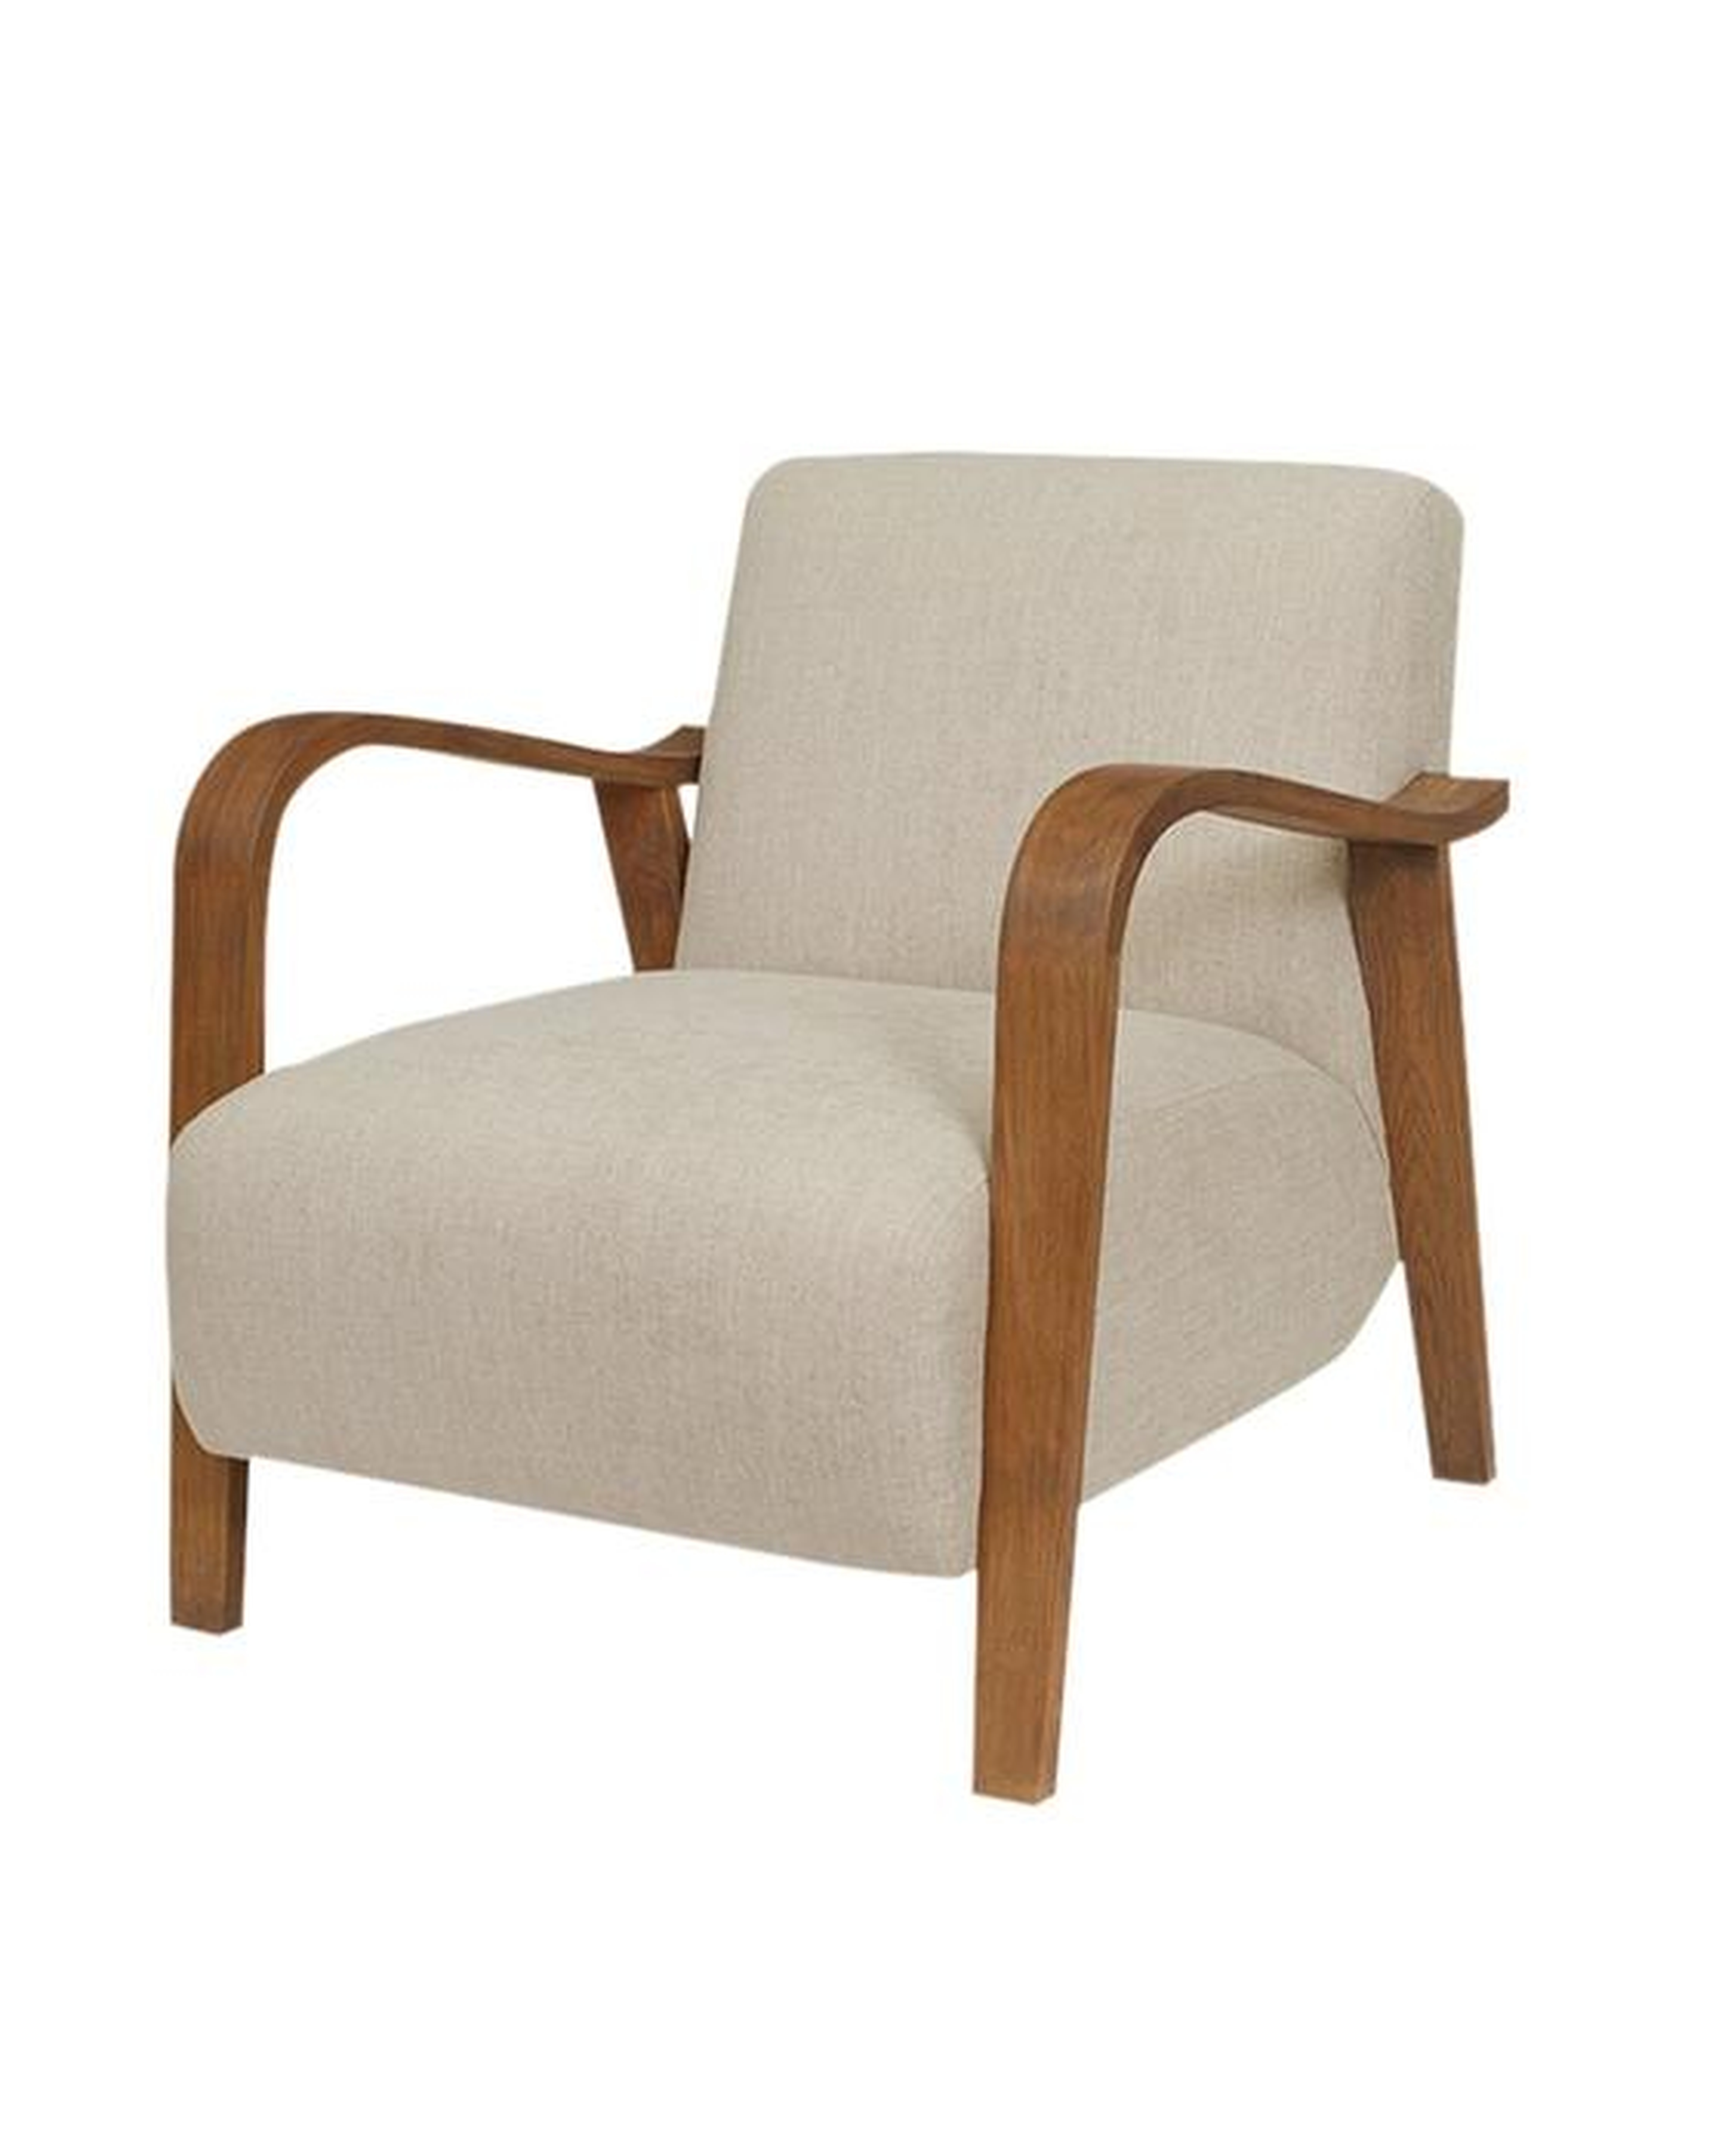 Merwin Chair - McGee & Co.